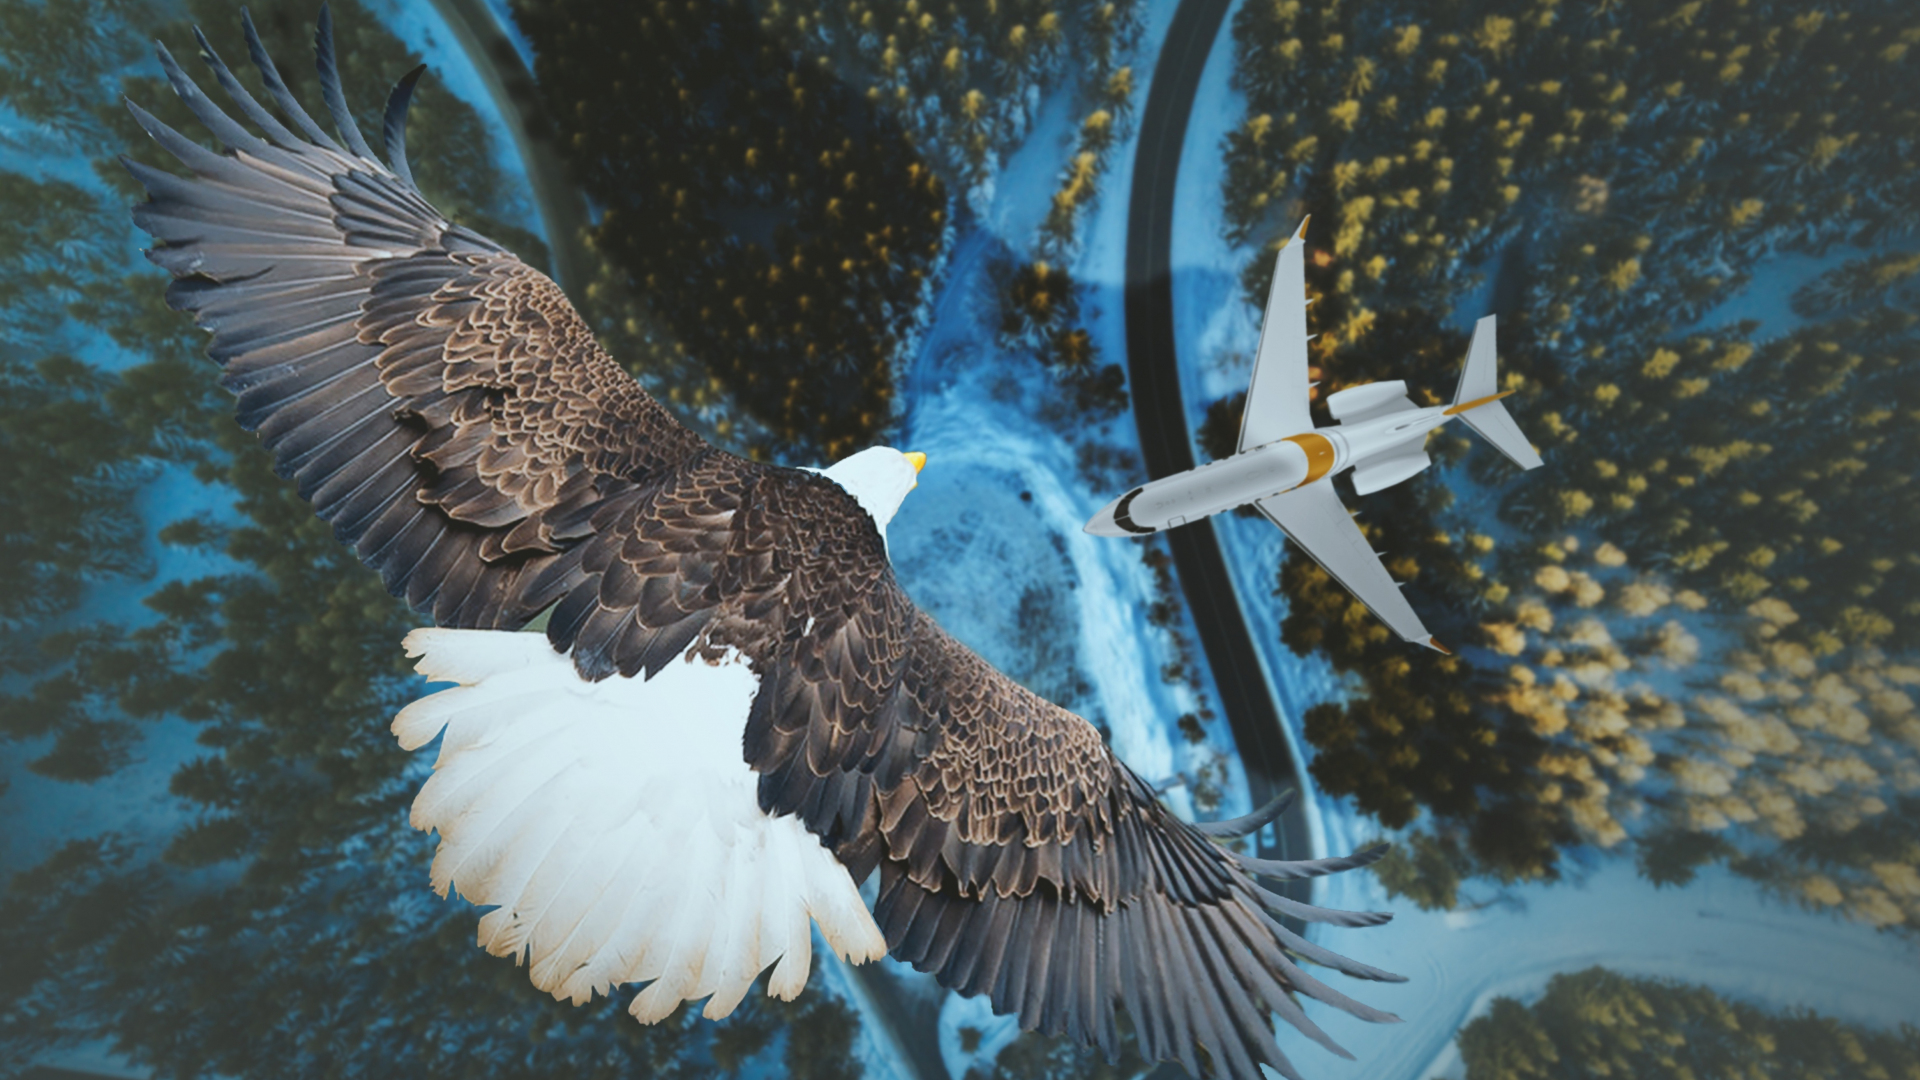 wallpaper hd 1080p eagle